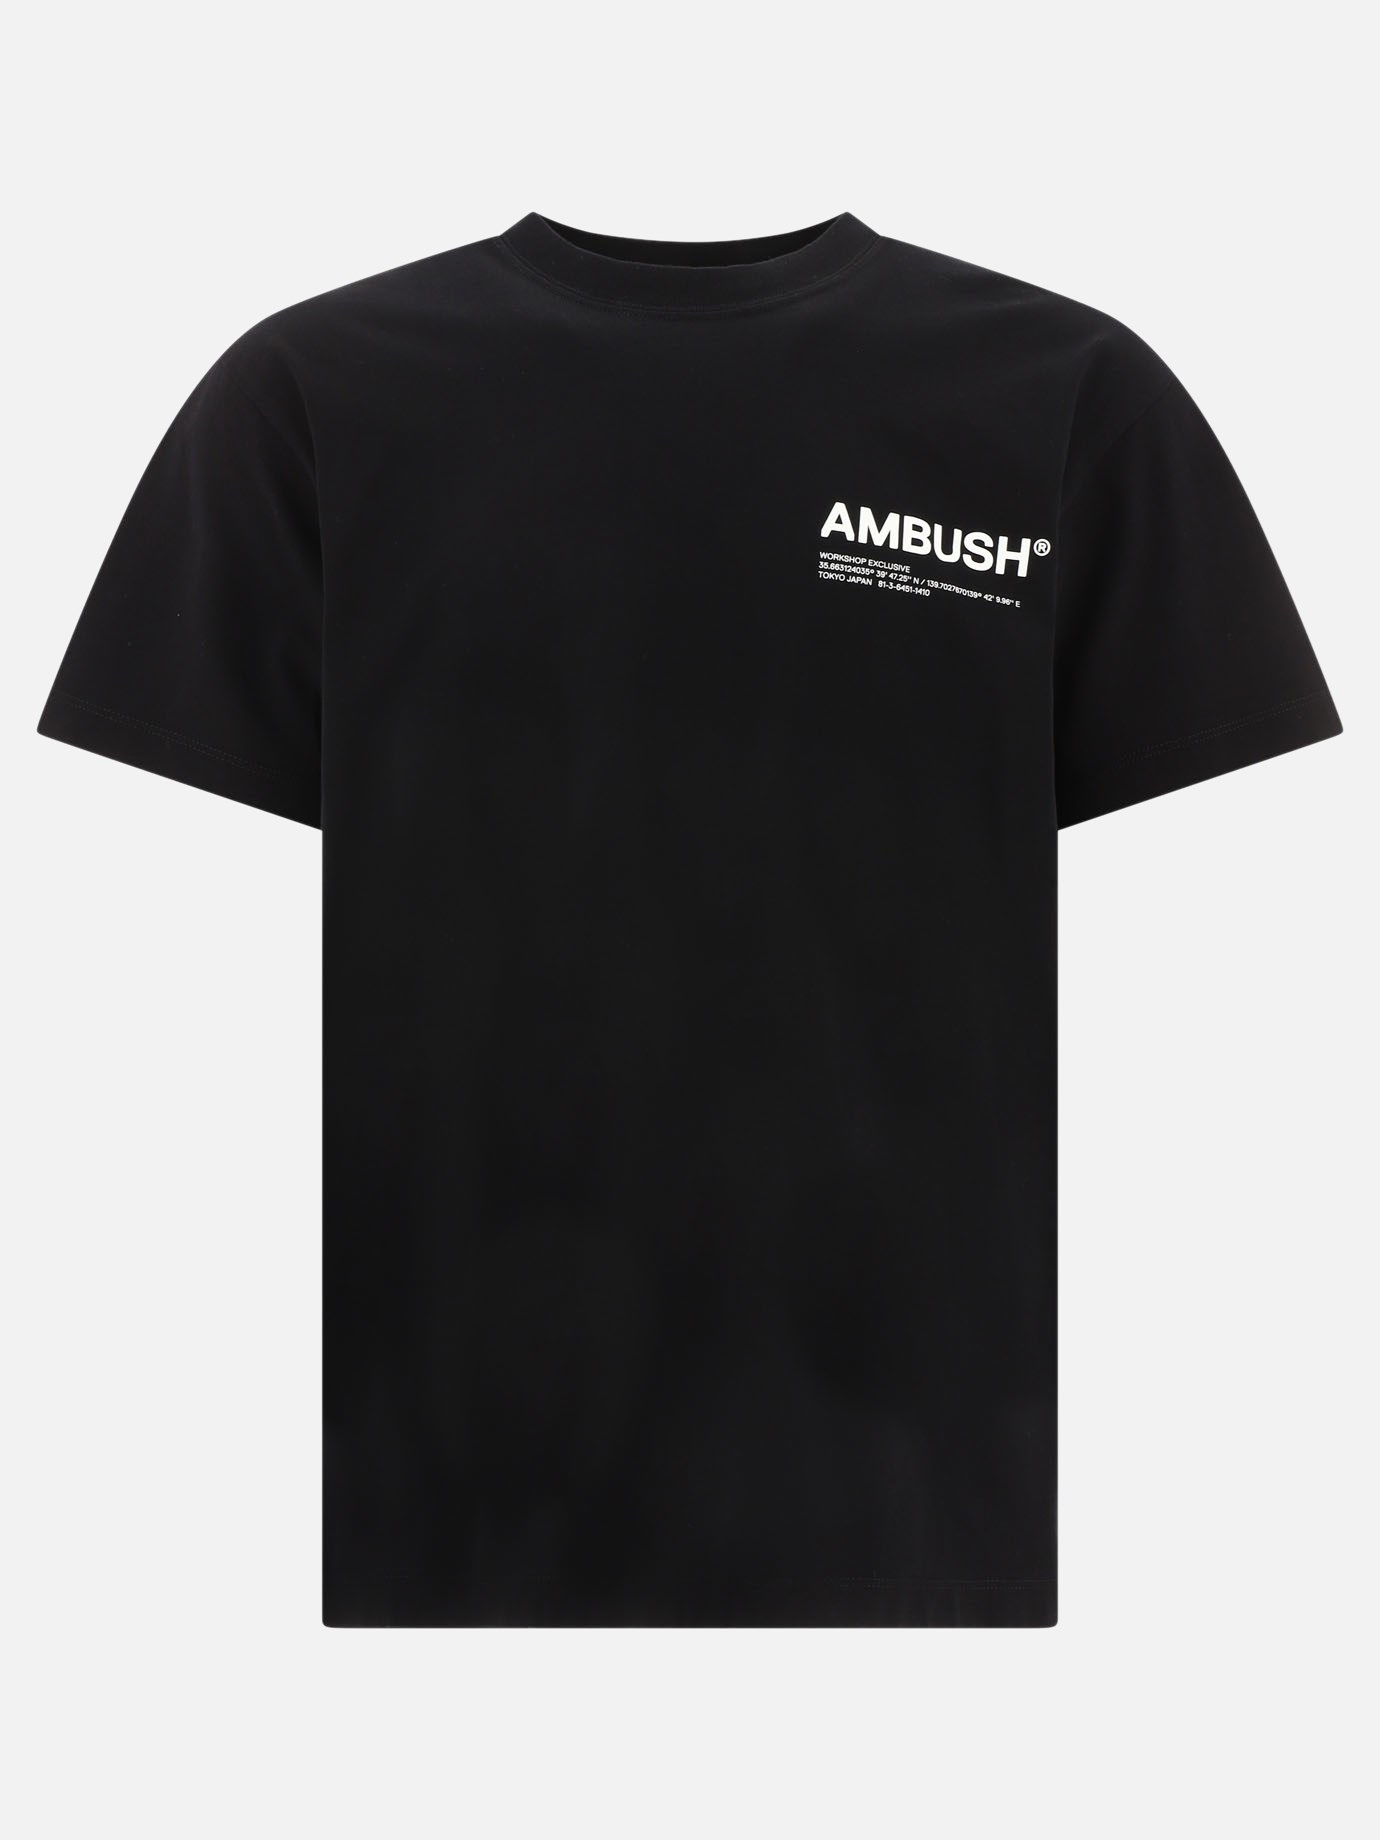  Workshop  t-shirtby Ambush - 1